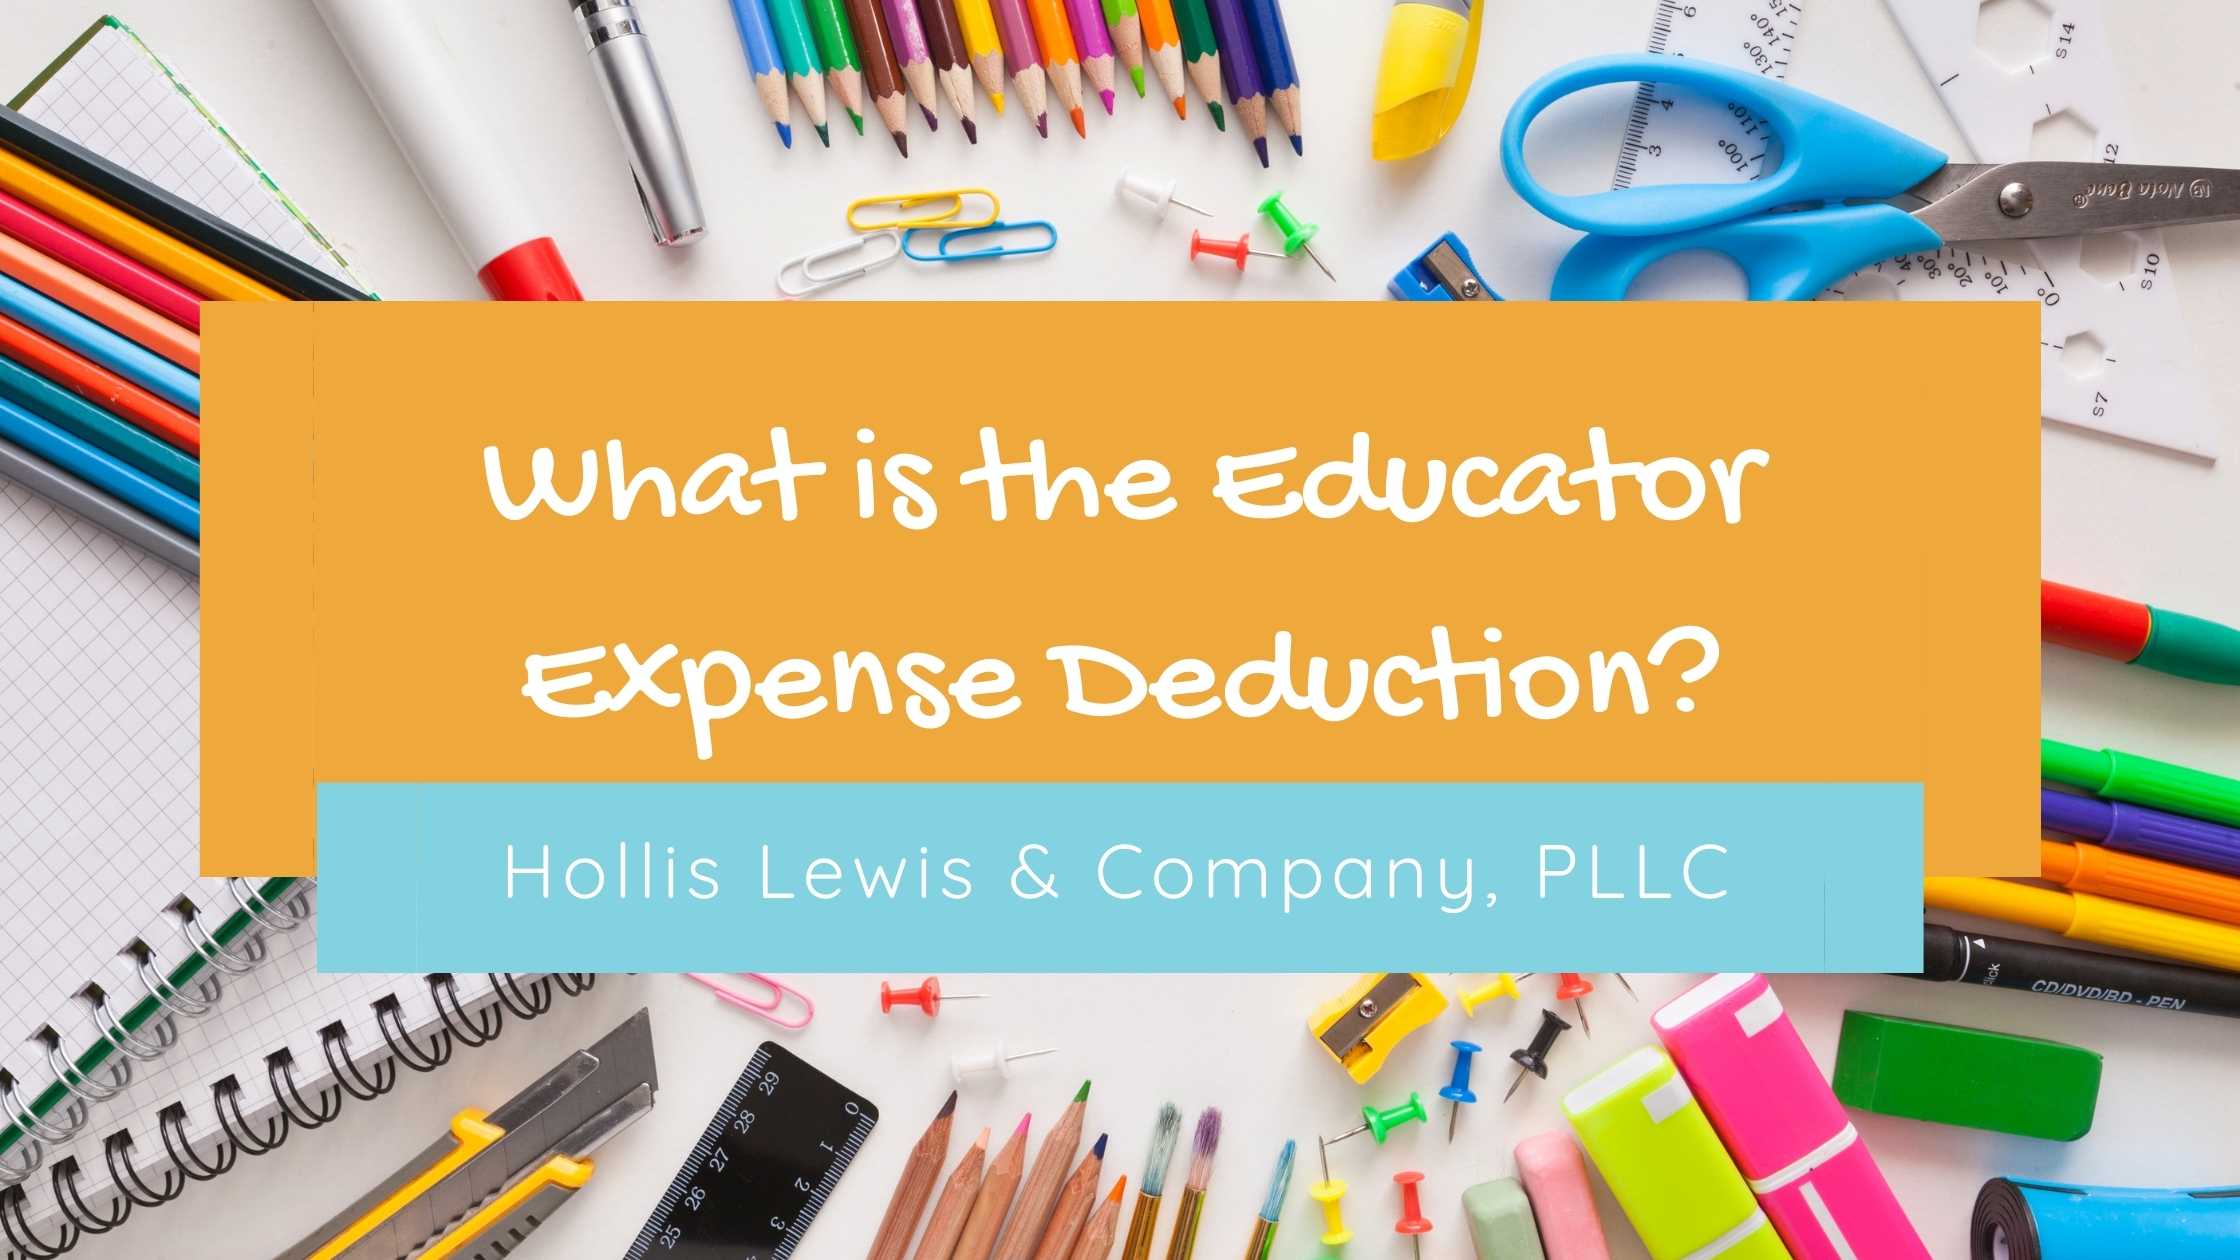 mn k 12 education deduction expenses